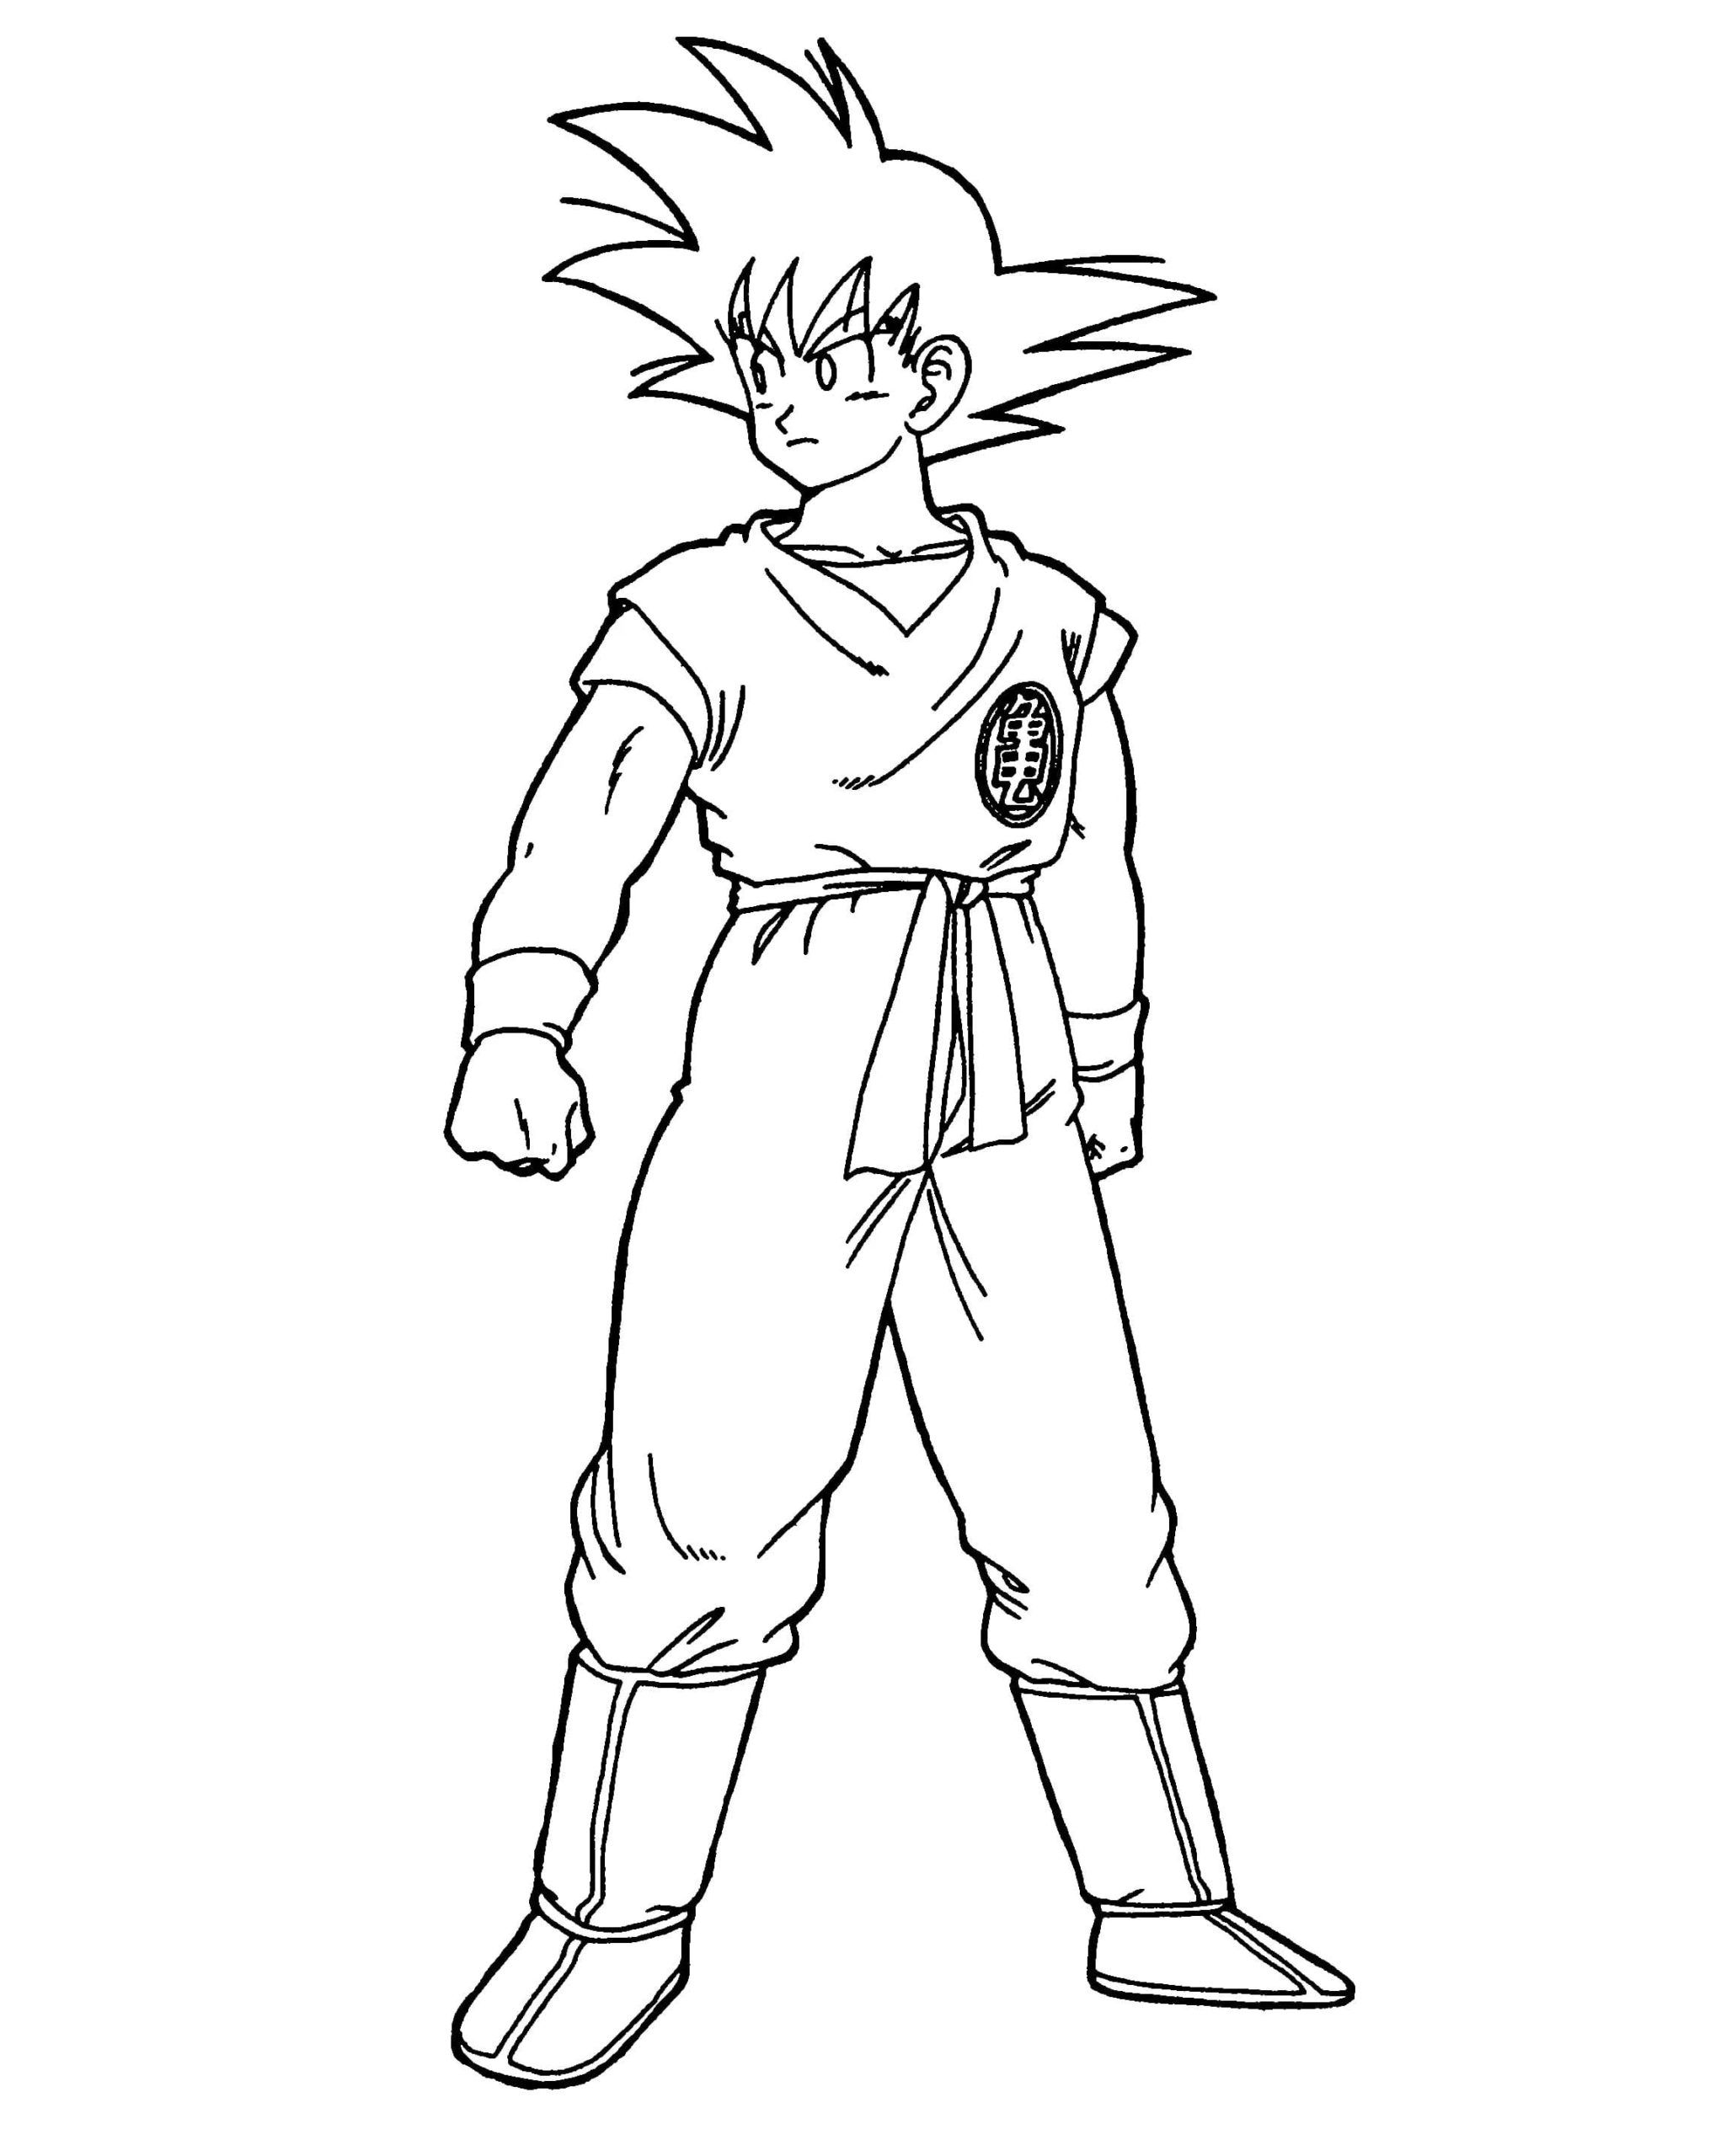 Coloring page Dragon Ball Goku is the main character